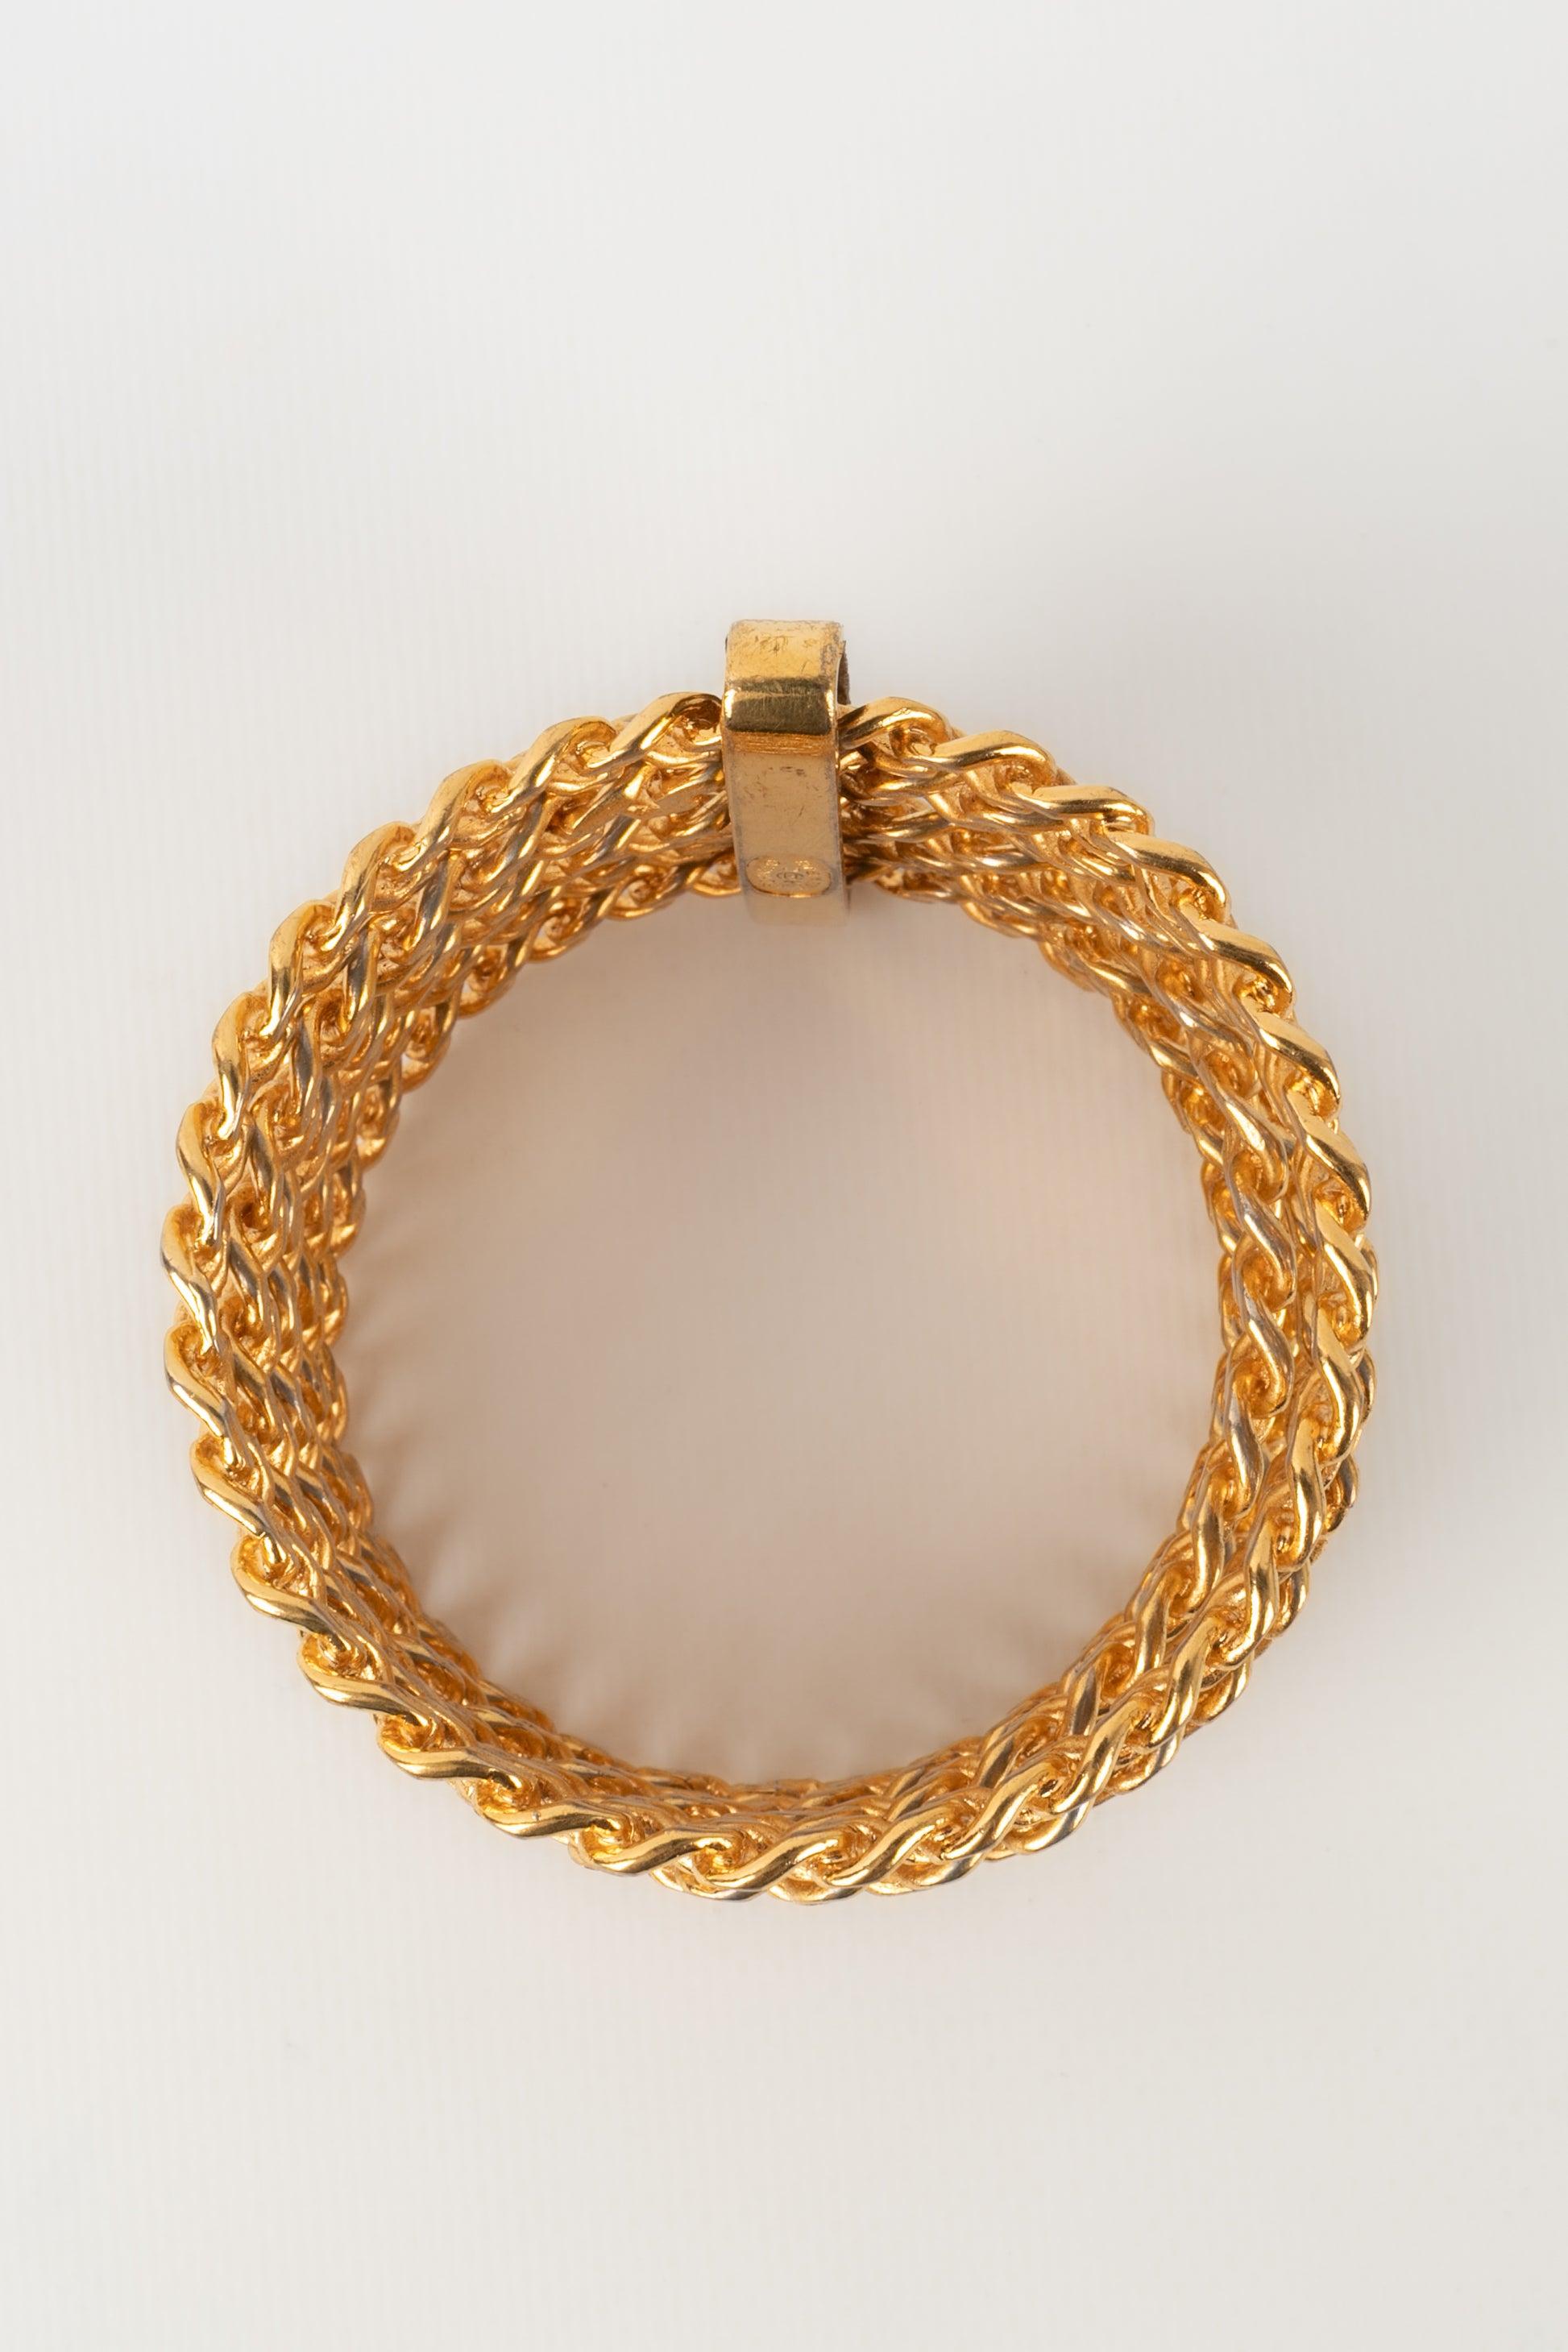 Chanel Golden Metal Bracelet, Cruise 1993 2